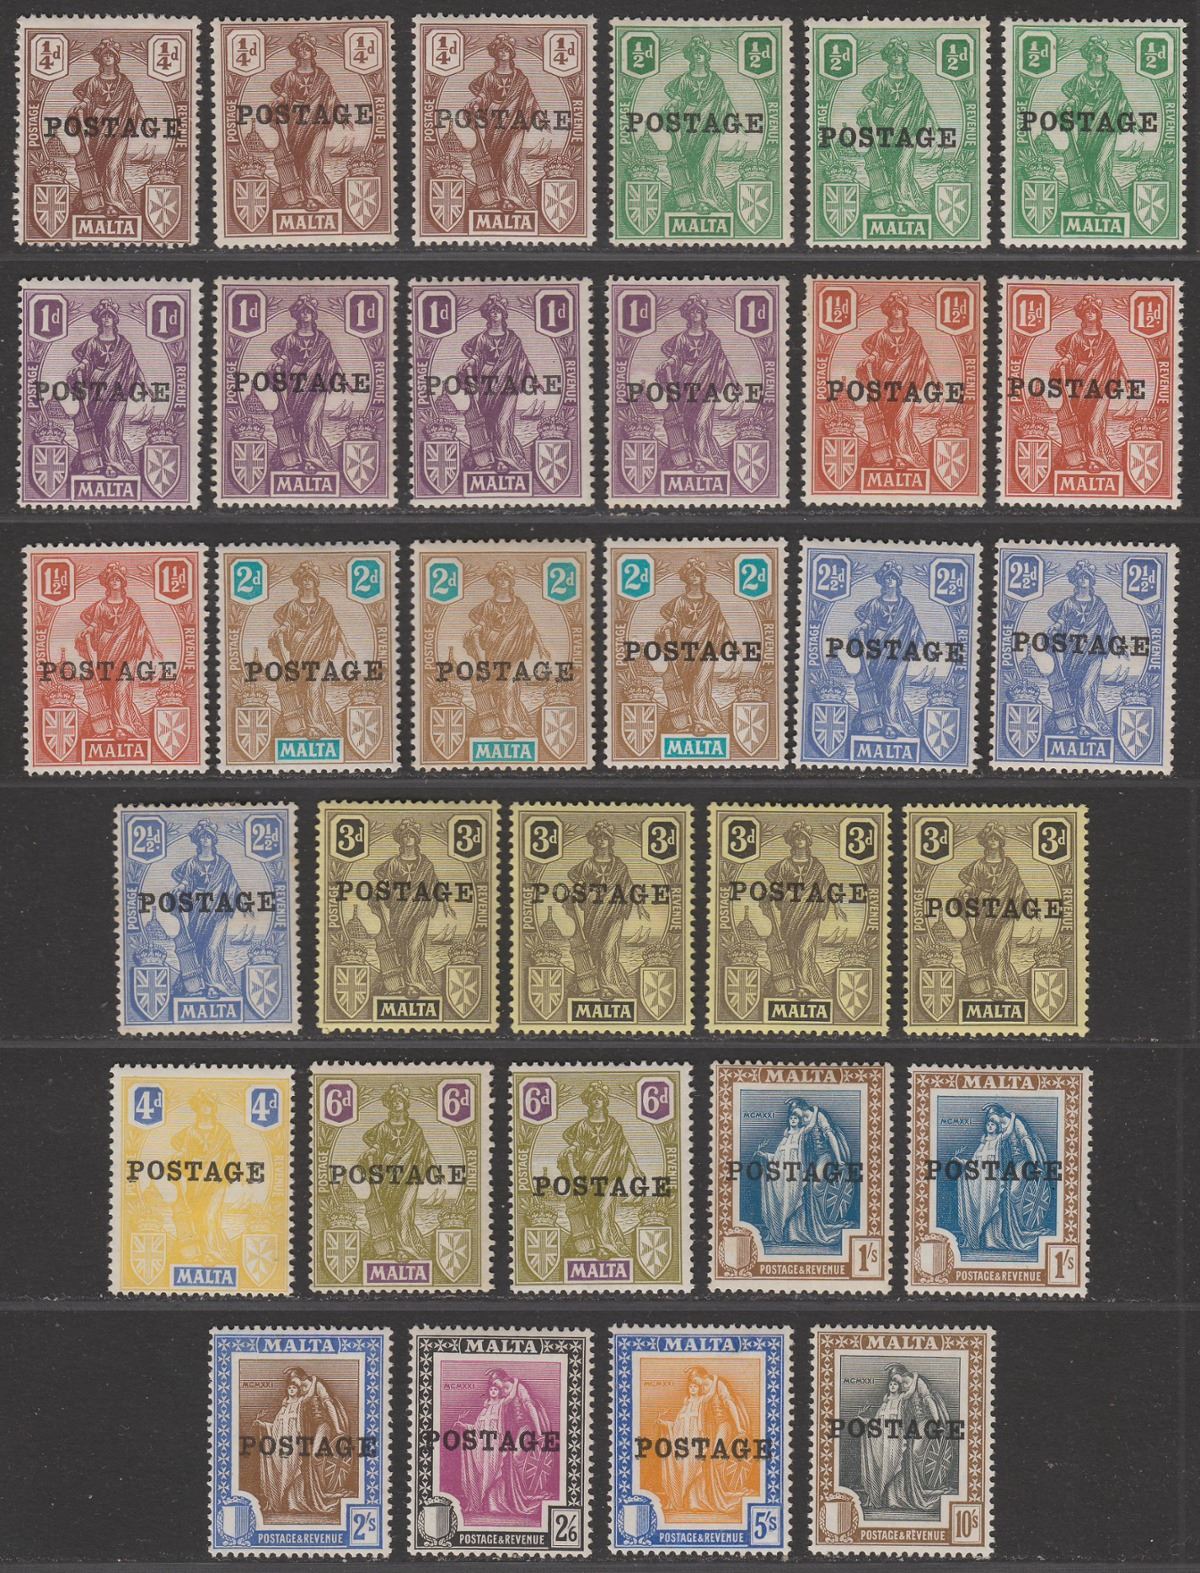 Malta 1926 KGV Figure Postage Overprint Mint SG143-156 with shades cat £110+